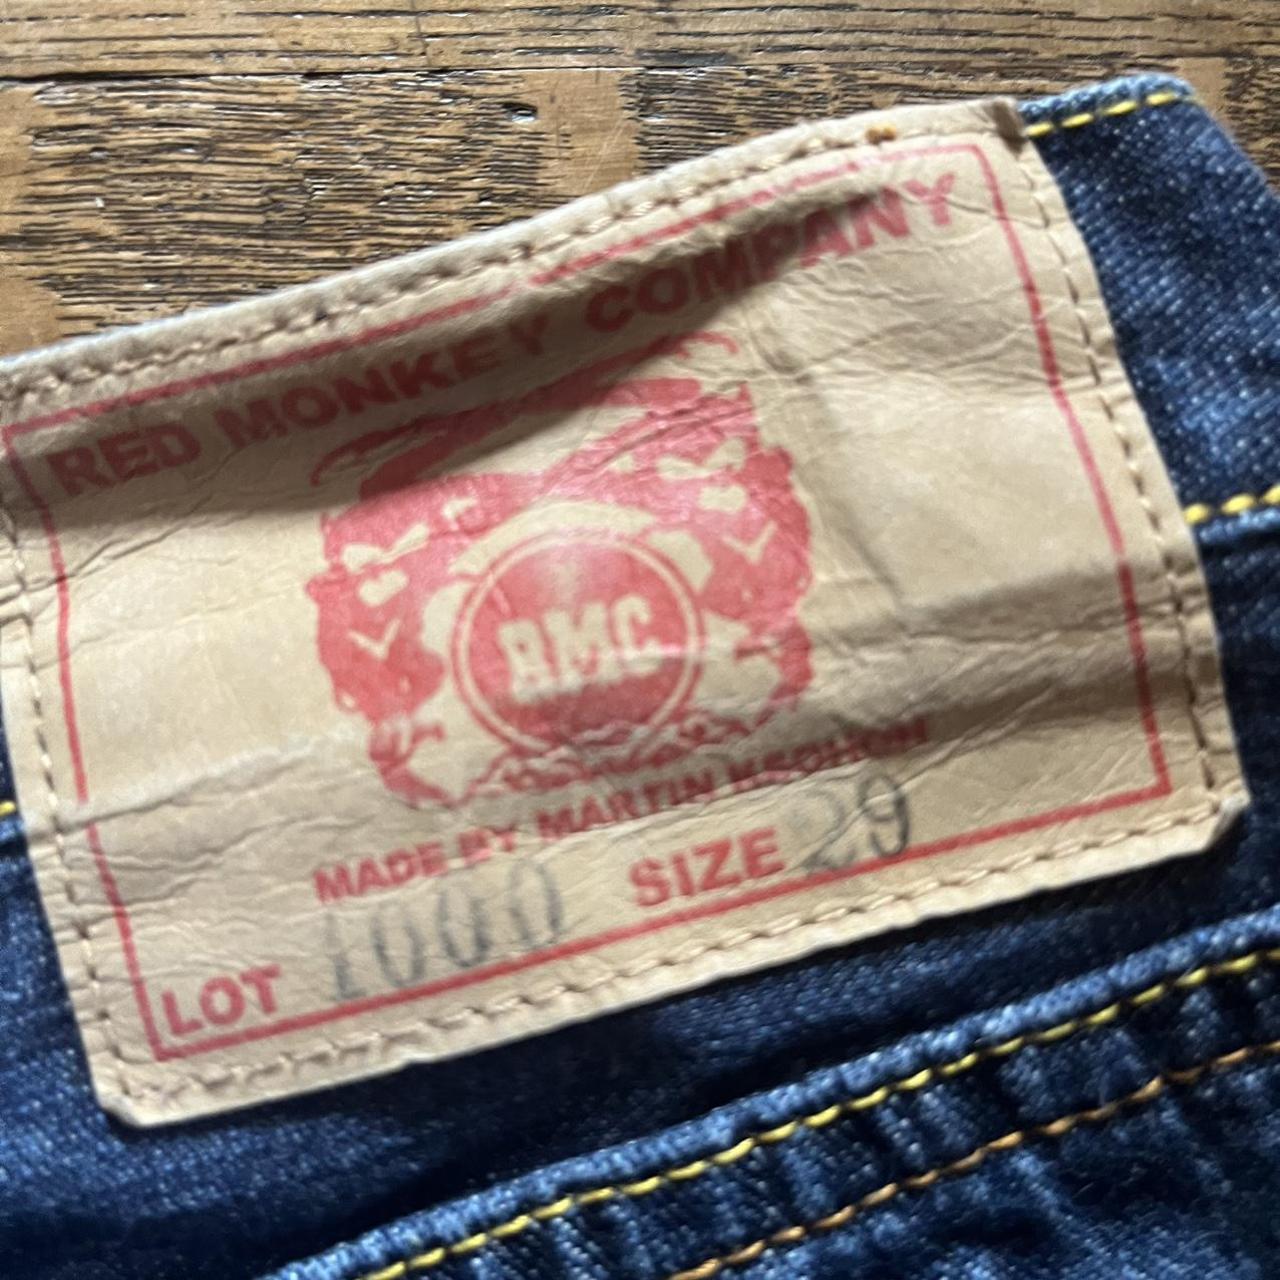 RMC mcdonalds jeans size 29 spectacular baggy... - Depop